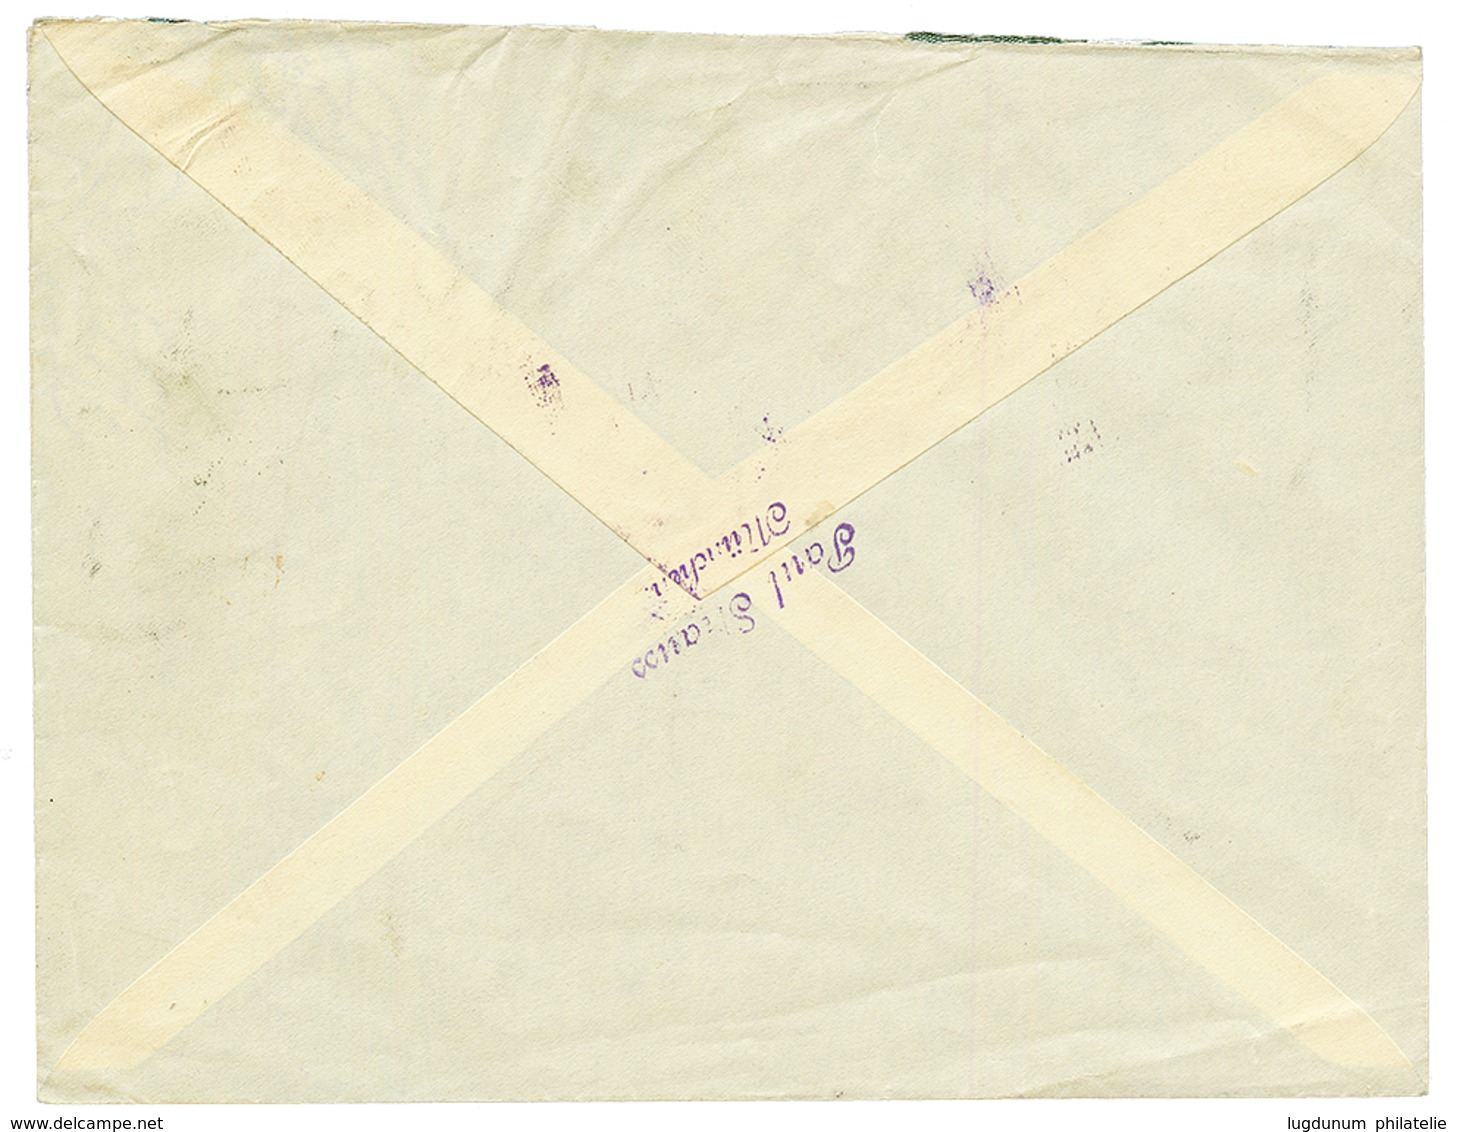 1914 2 GR. Canc. SHKODRE SCUTARI On REGISTERED Envelope To AUSTRIA. Superb. - Albania